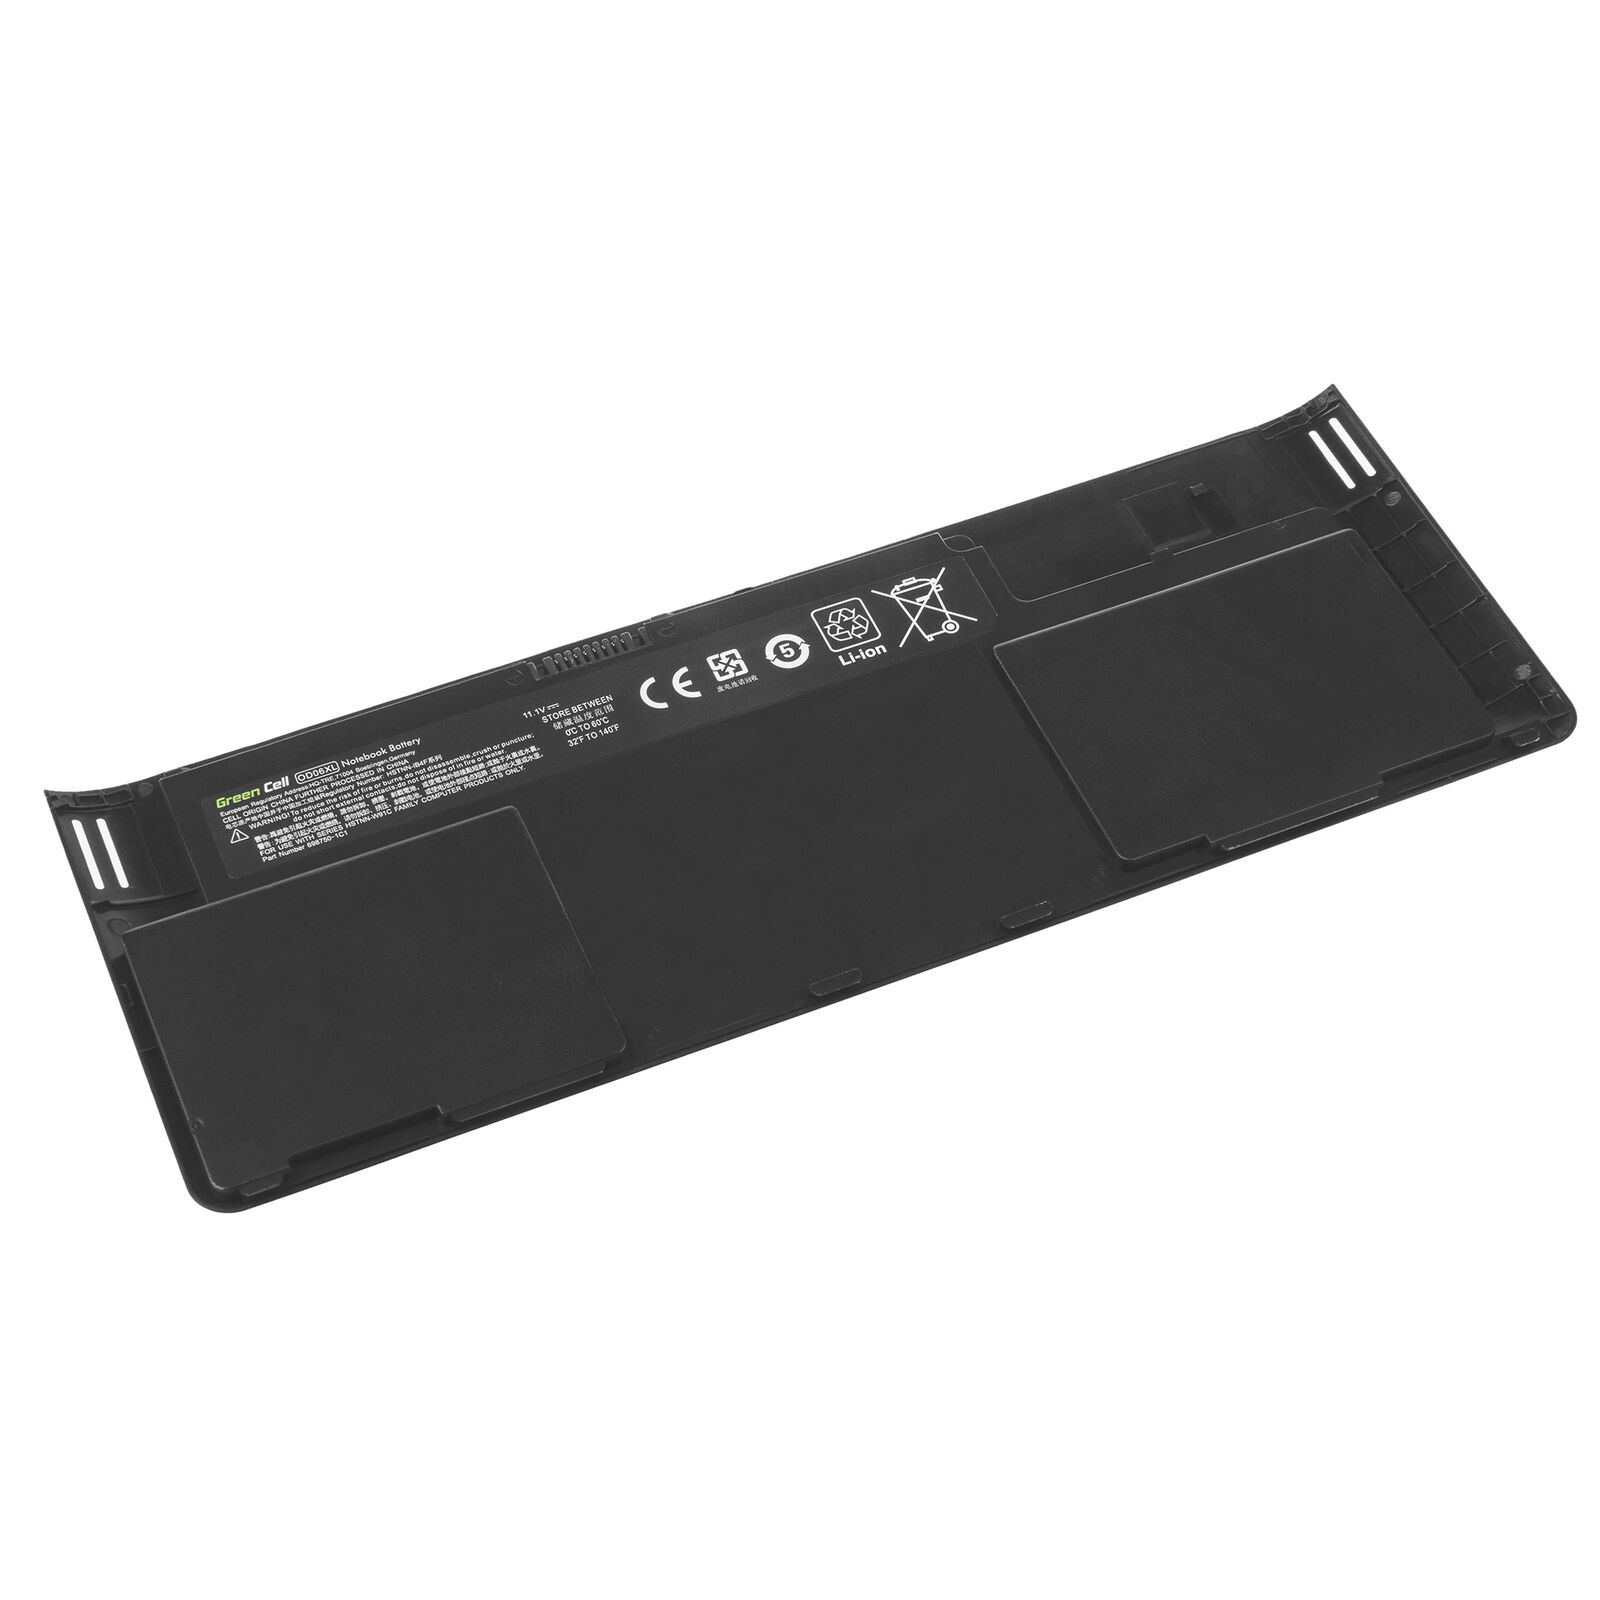 Akku für HP EliteBook Revolve 810 G1 G2 G3 0D06XL HSTNN-IB4F HSTNN-W91C(Ersatz)